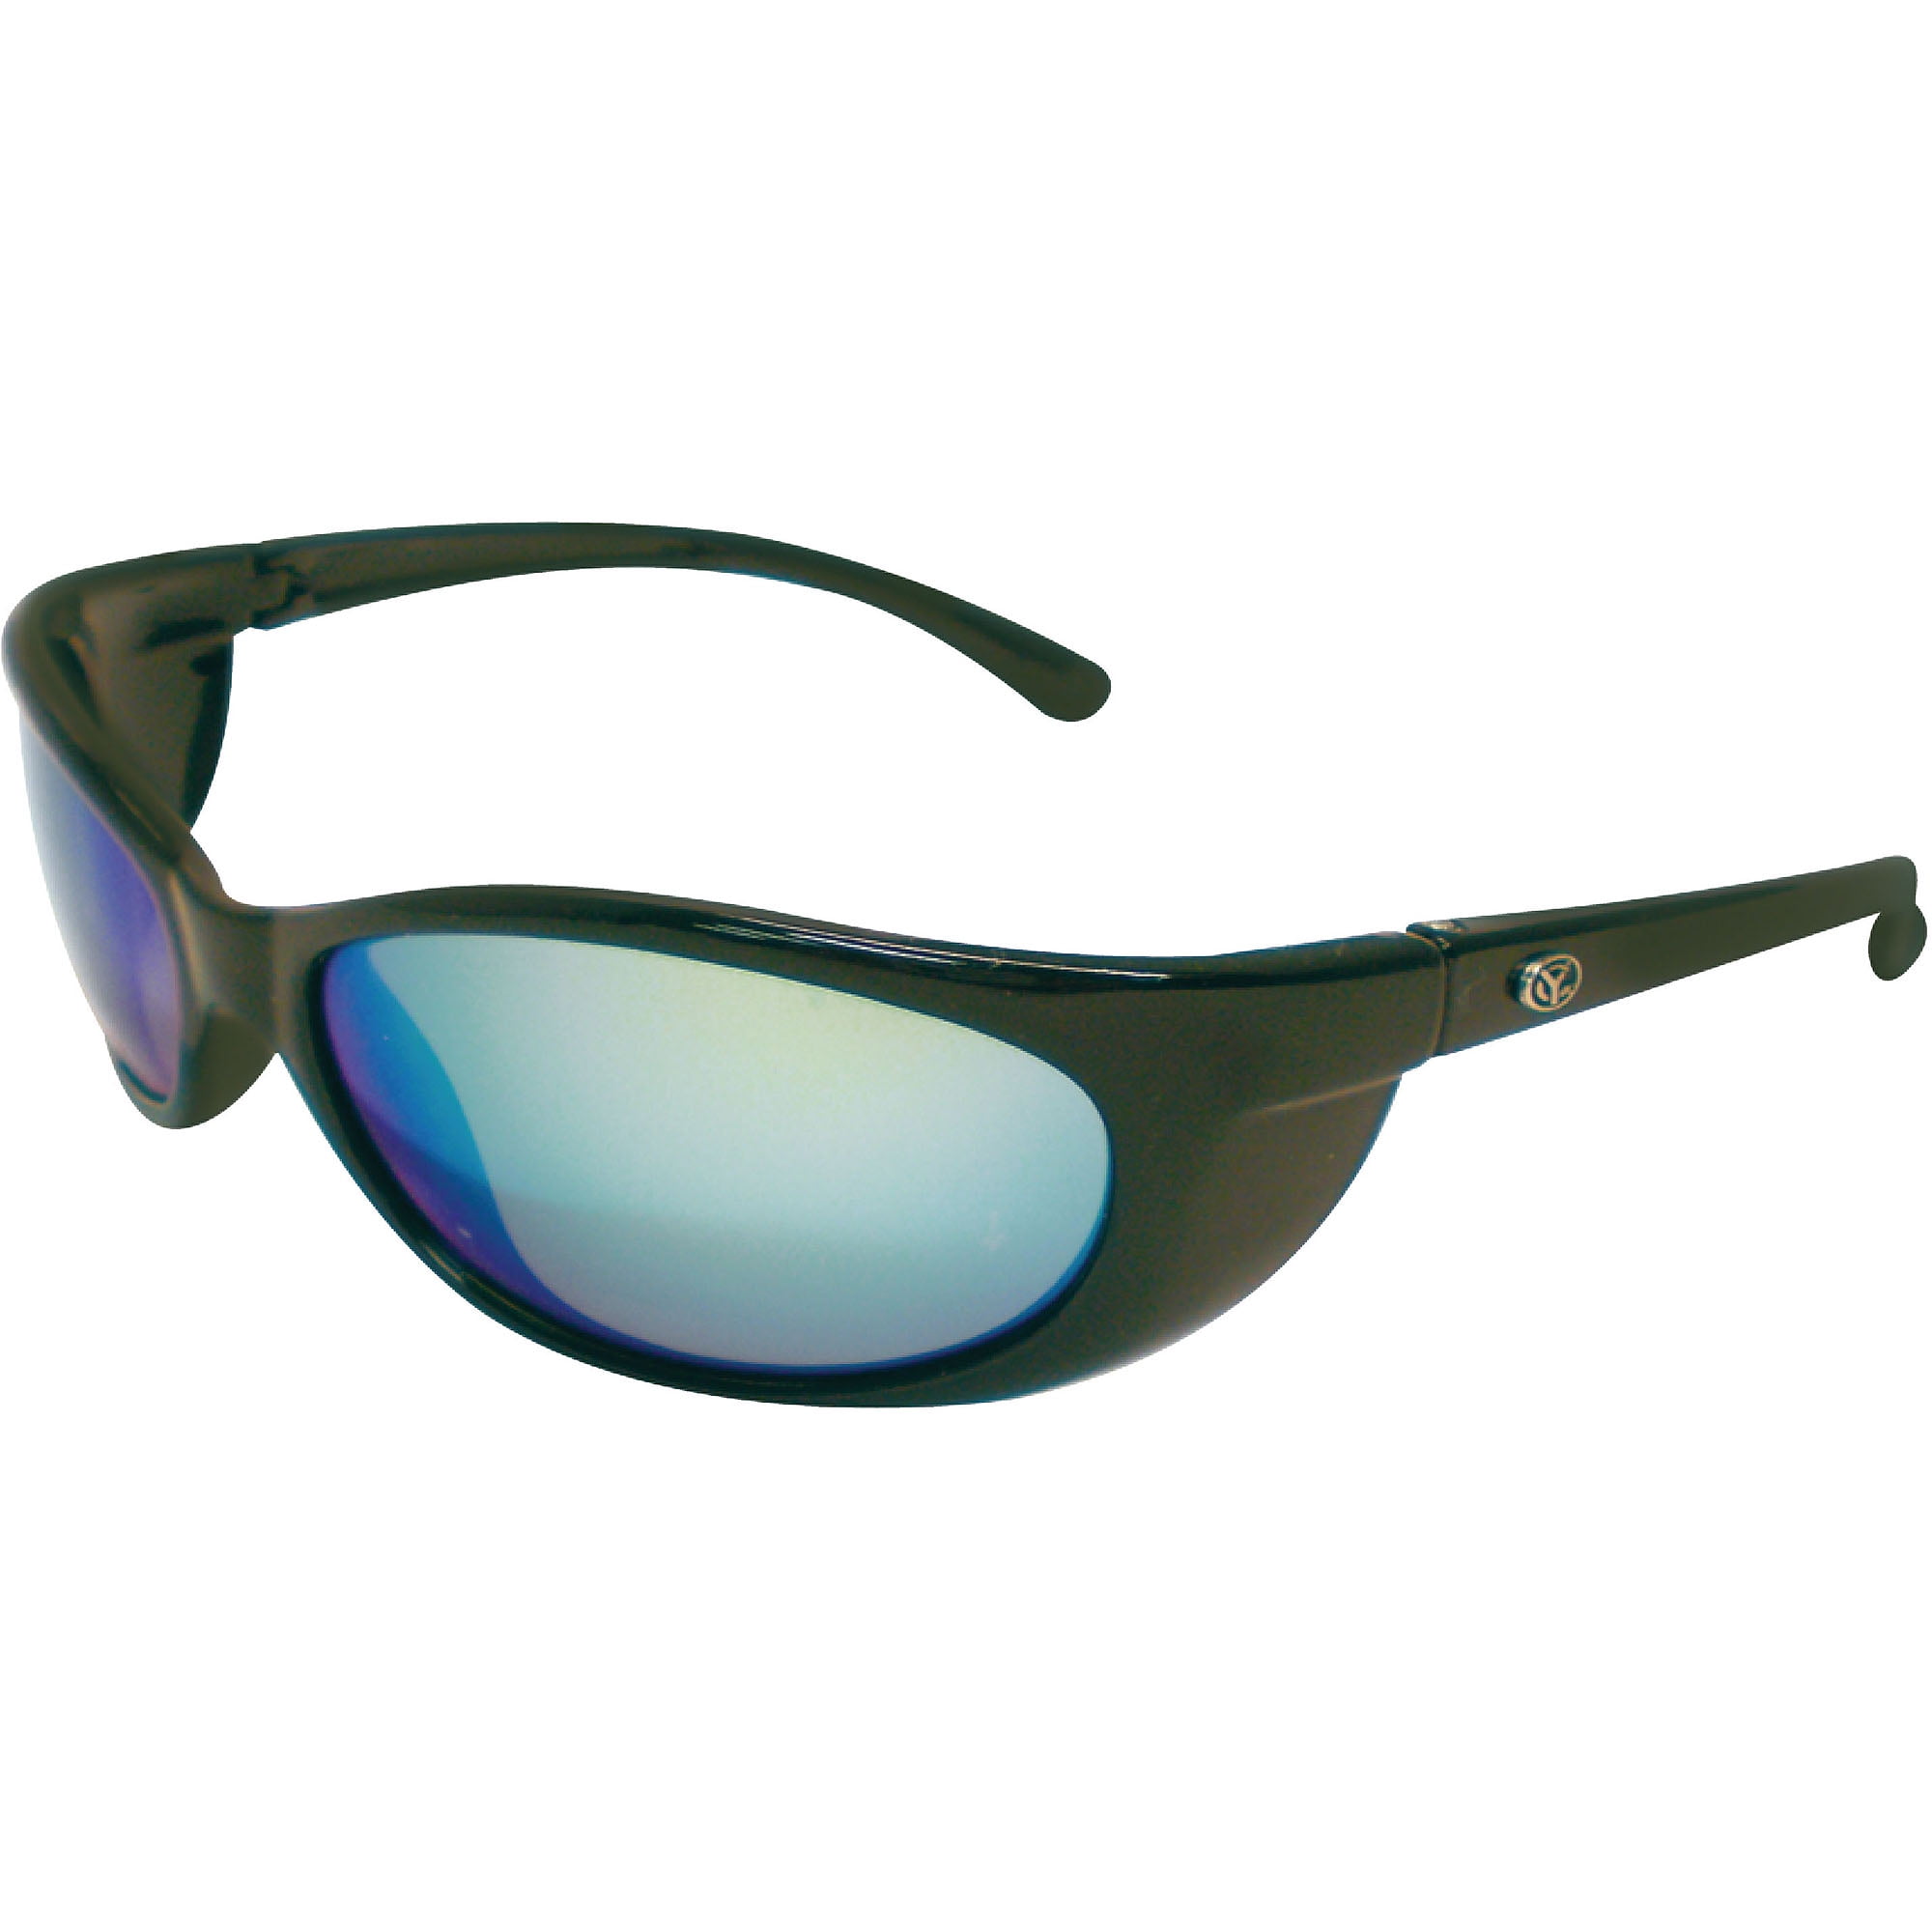  MOORAY Polarized Sunglasses for Men UV Protection